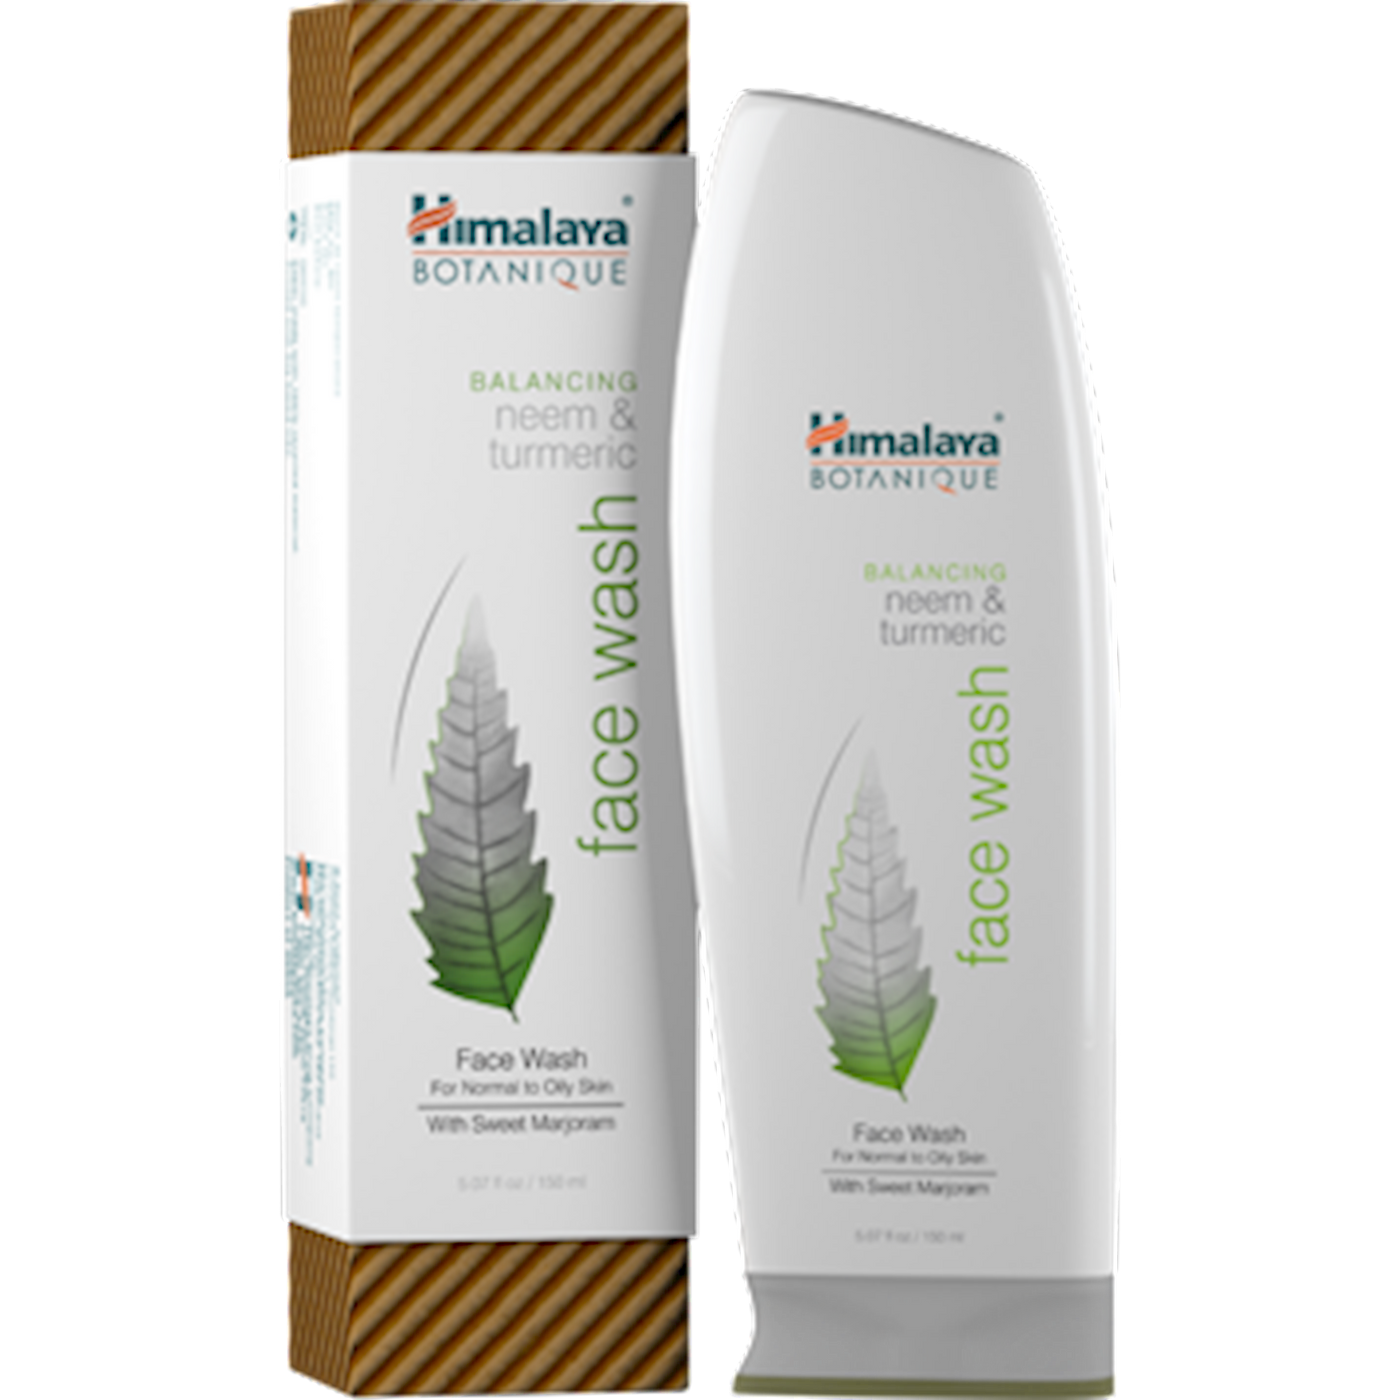 Botanique Neem &Turmeric Face Wash 150ml Curated Wellness